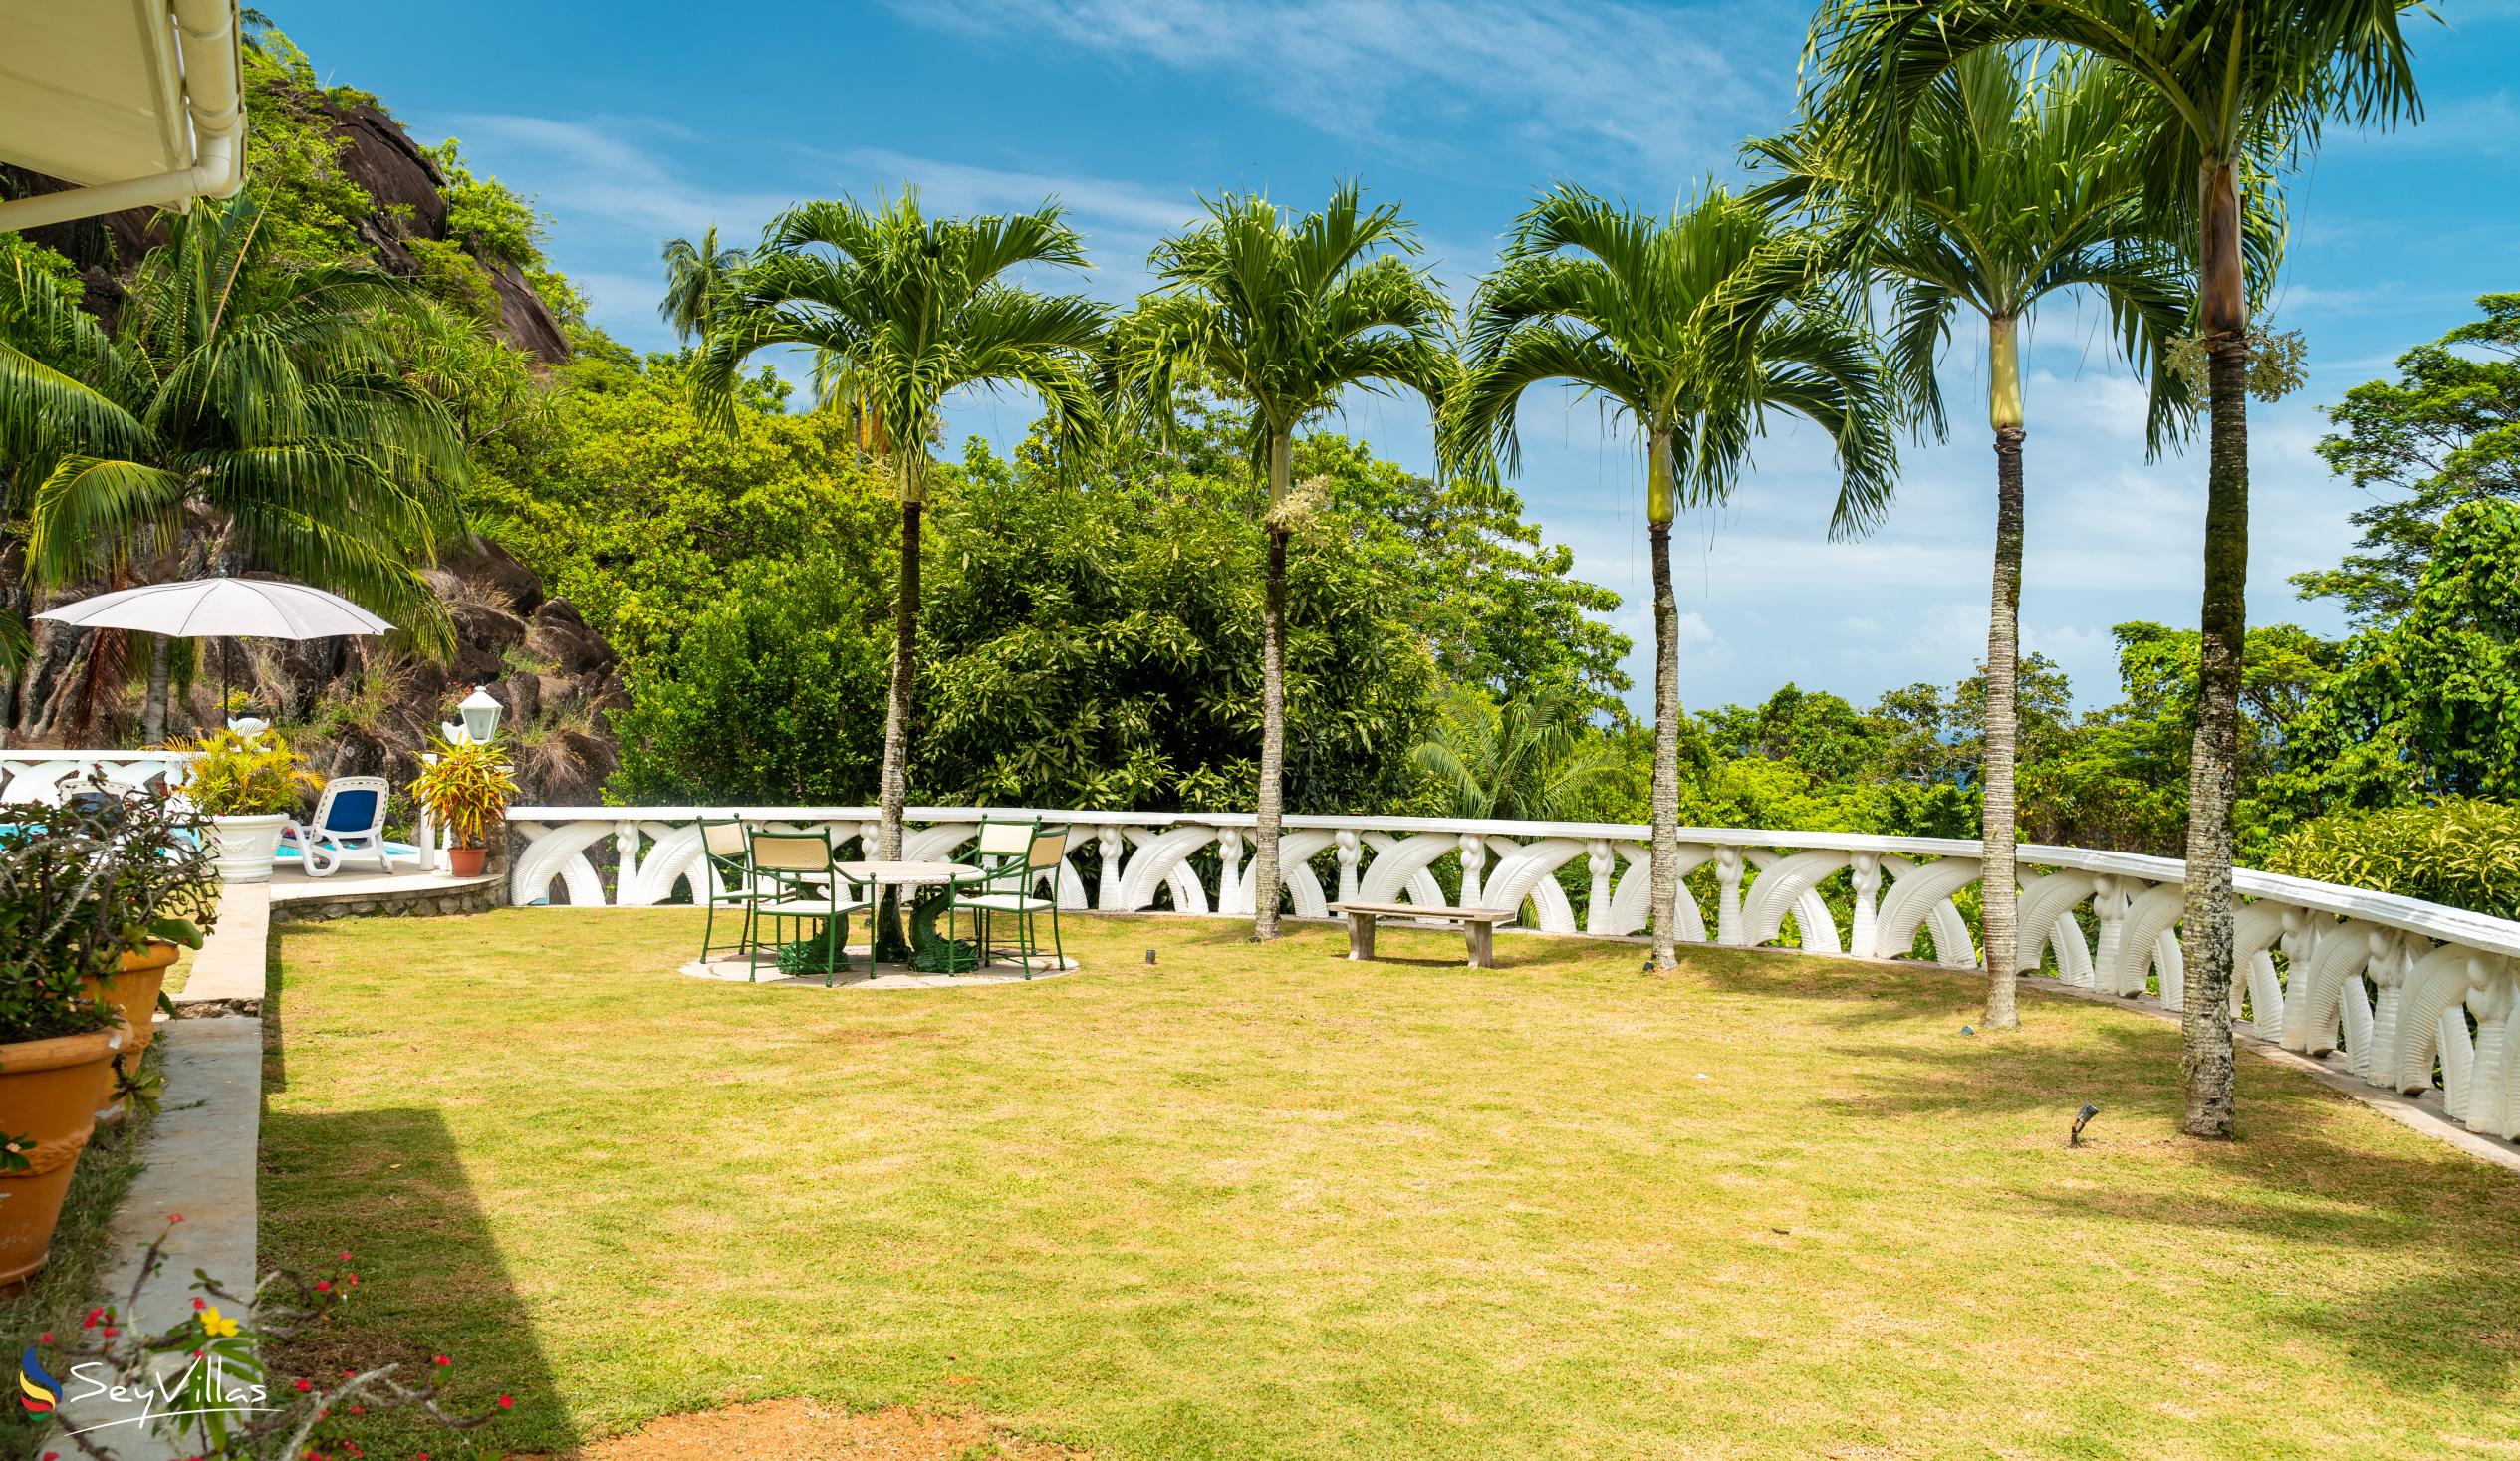 Foto 24: Villa Gazebo - Aussenbereich - Mahé (Seychellen)